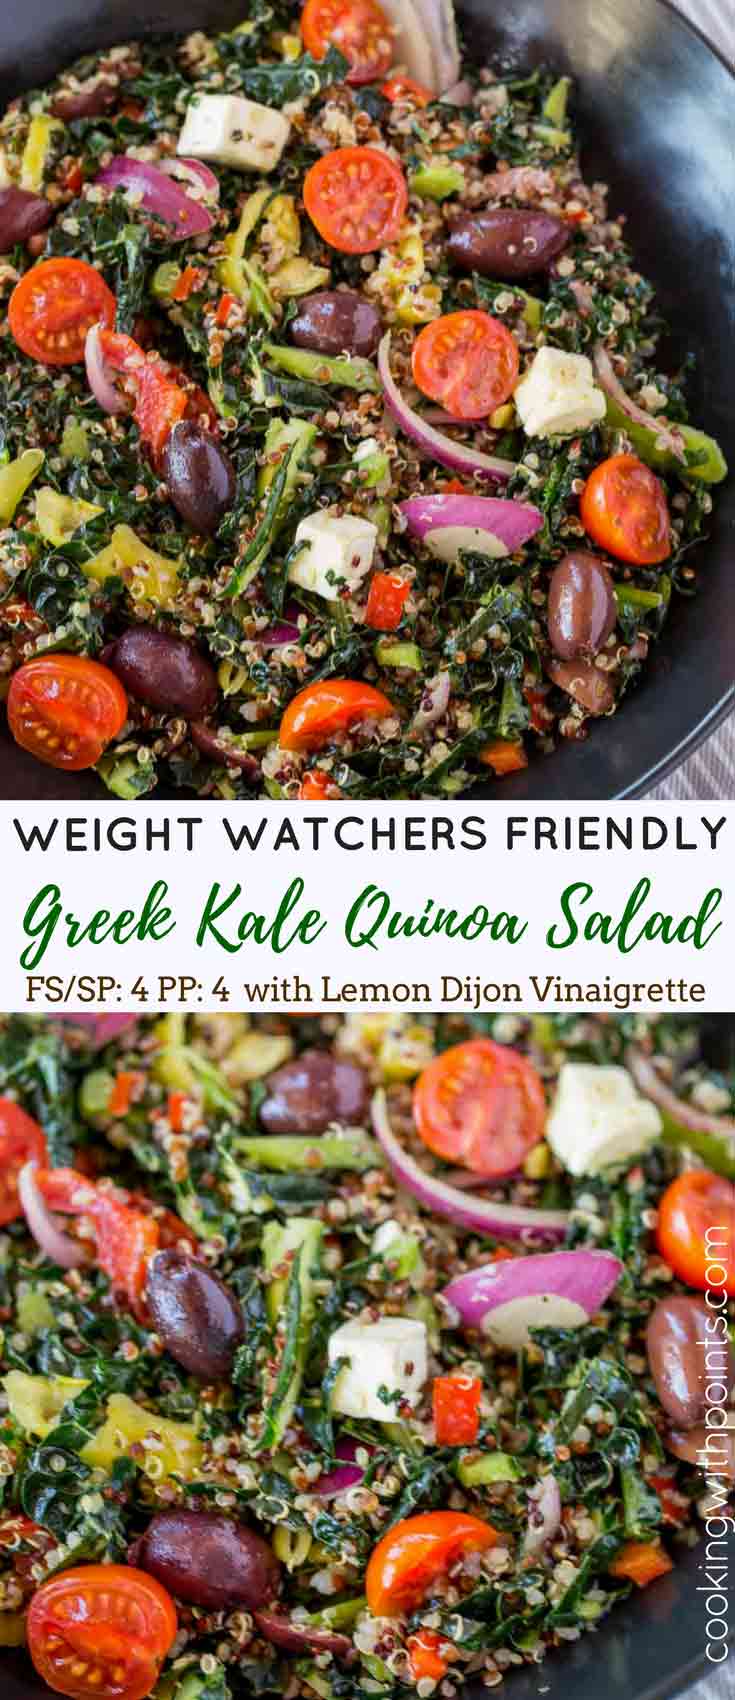 Quinoa Salad with Kale